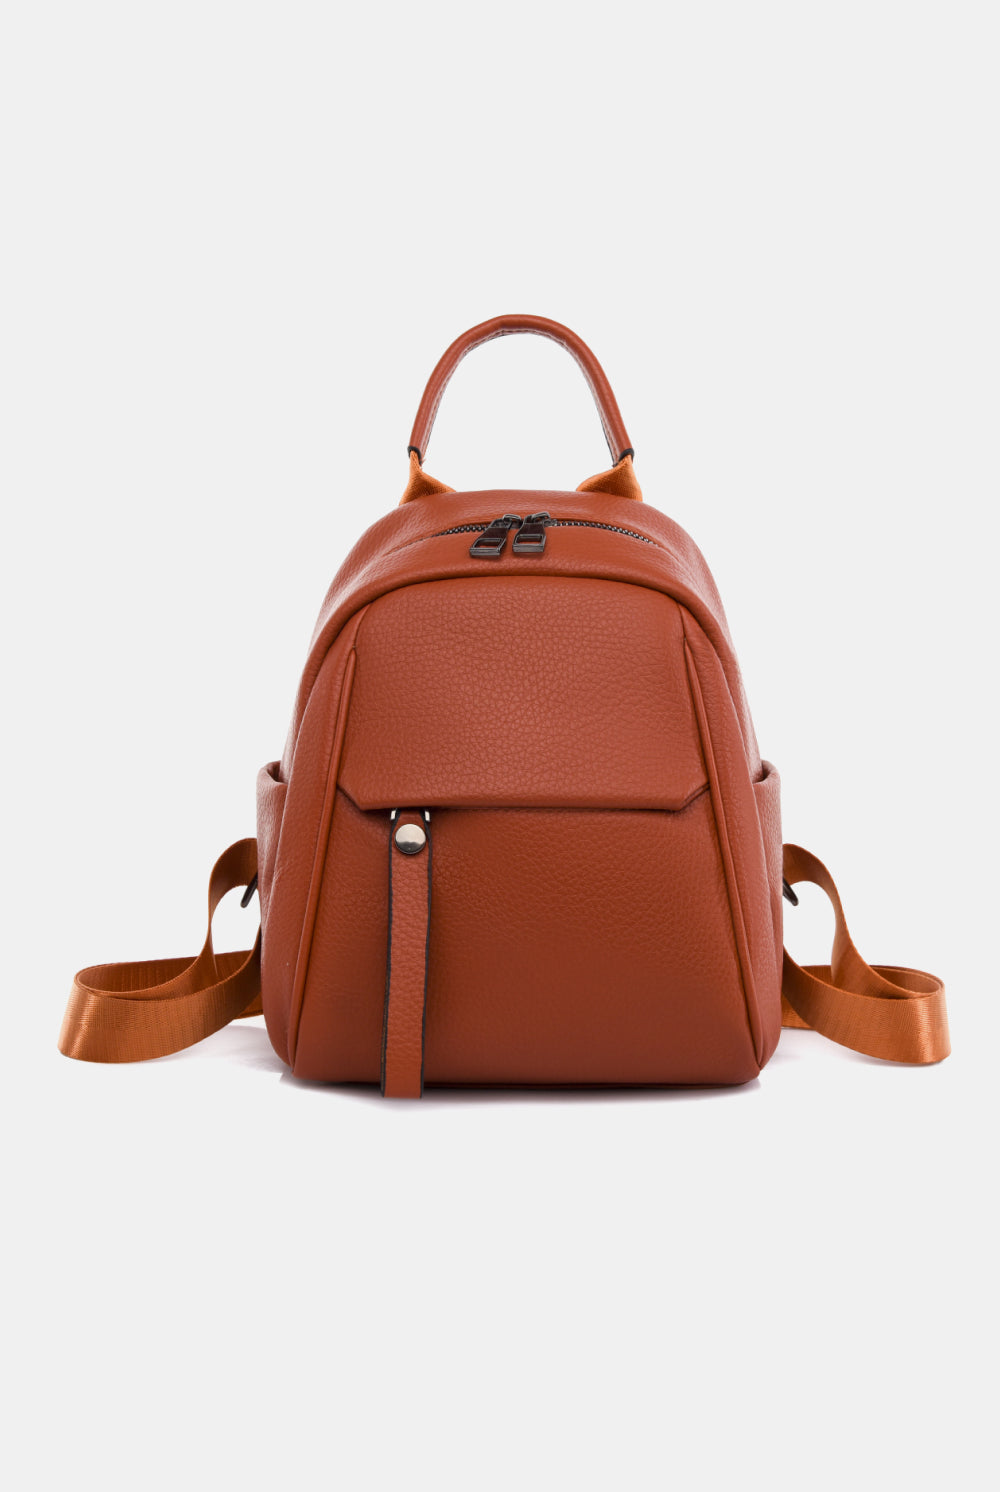 Sienna Small PU Leather Backpack Handbags